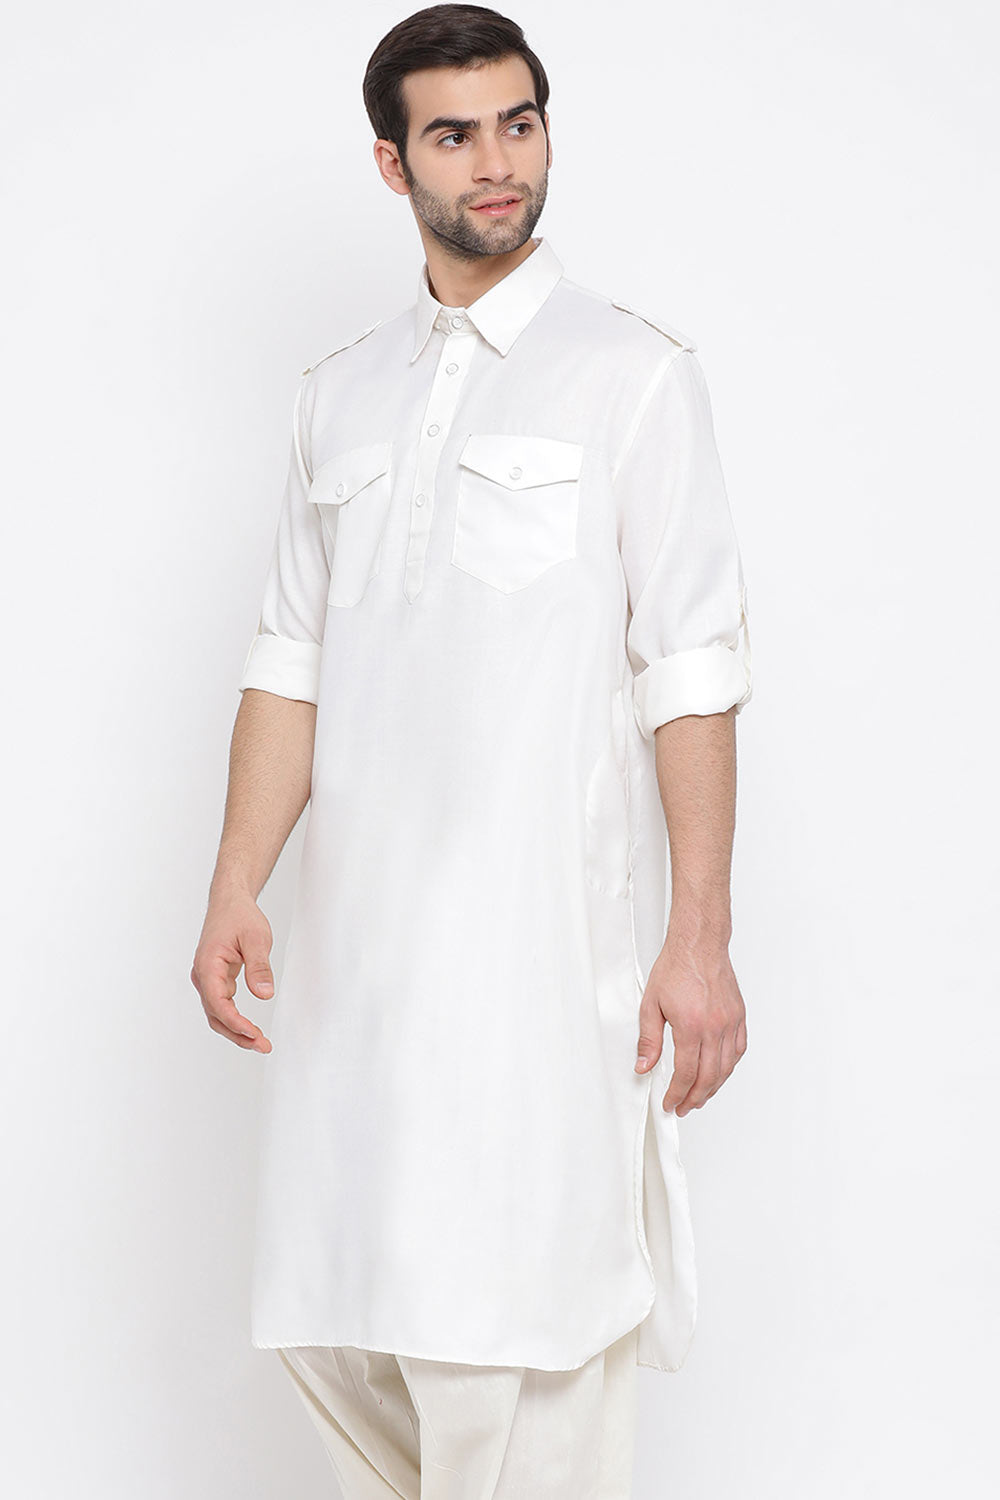 White Blended Cotton Pathani Kurta for Men's